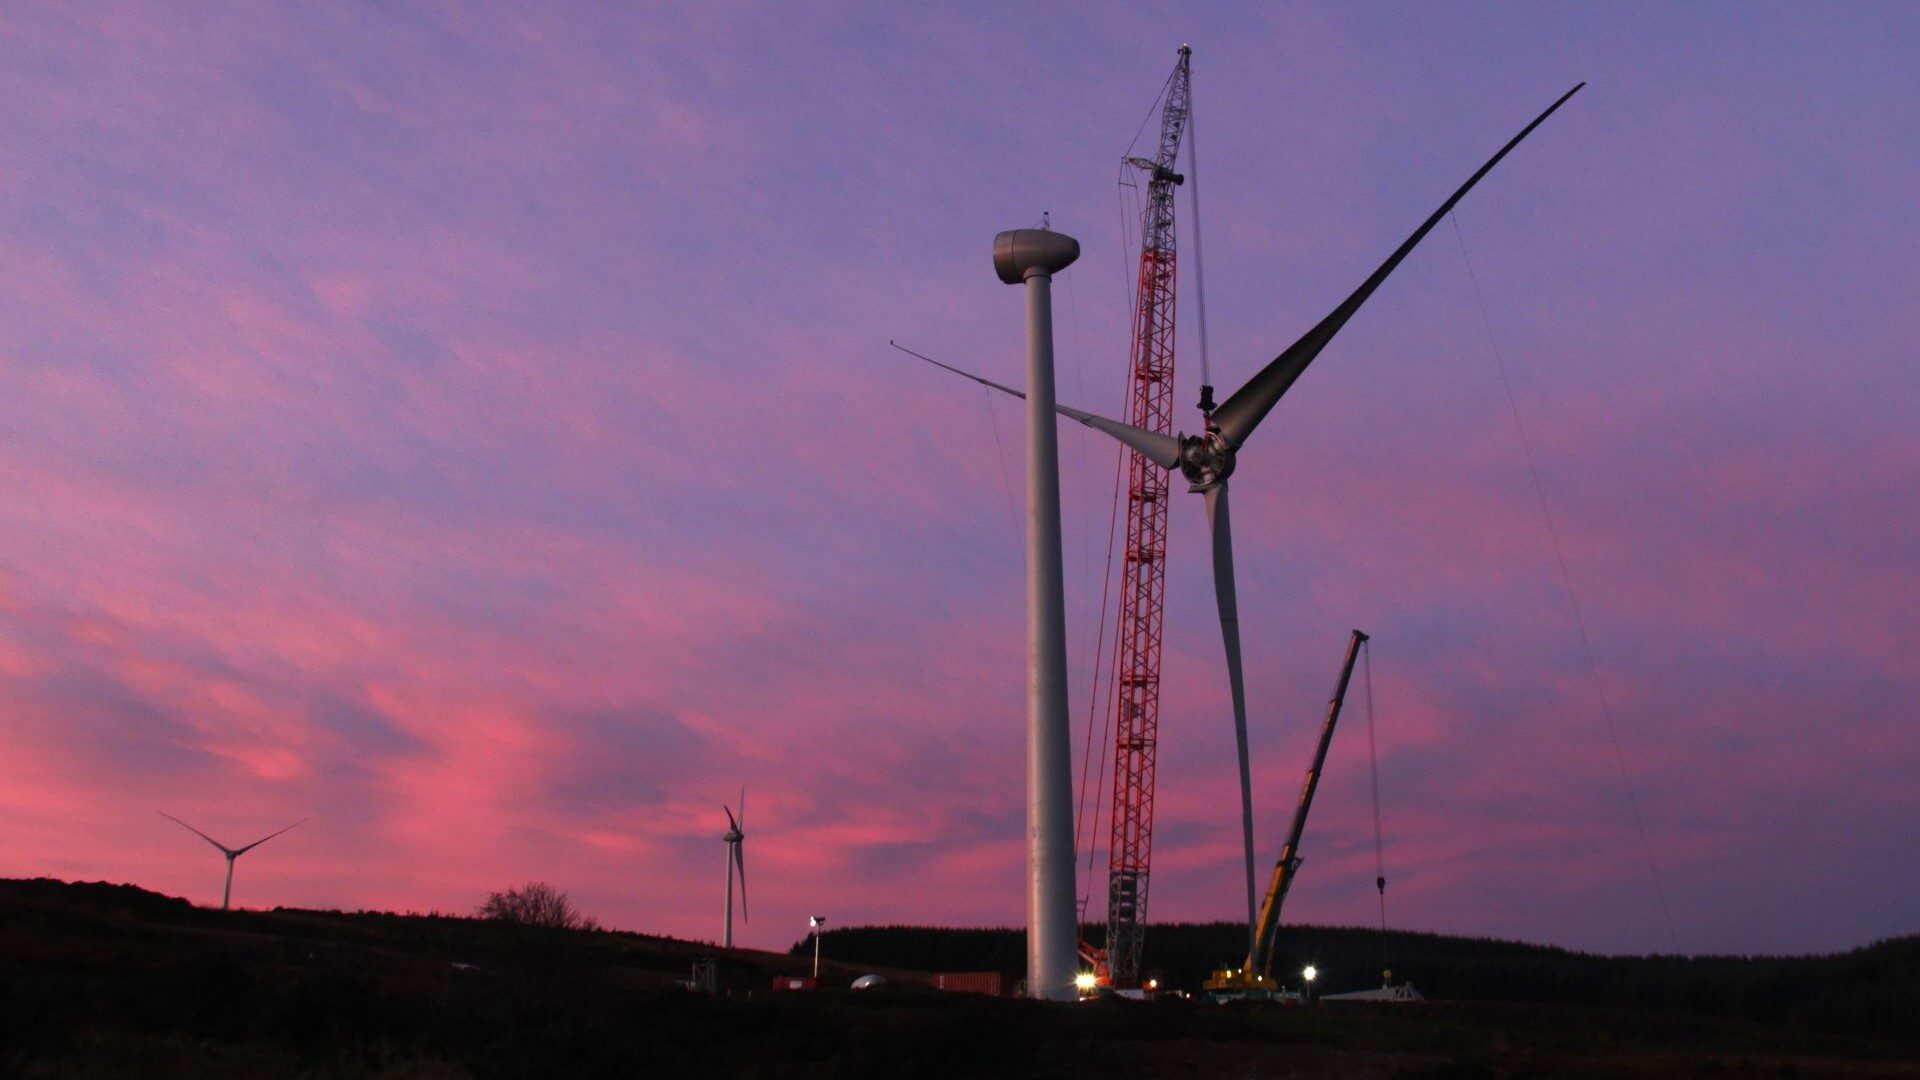 wind turbine under construction